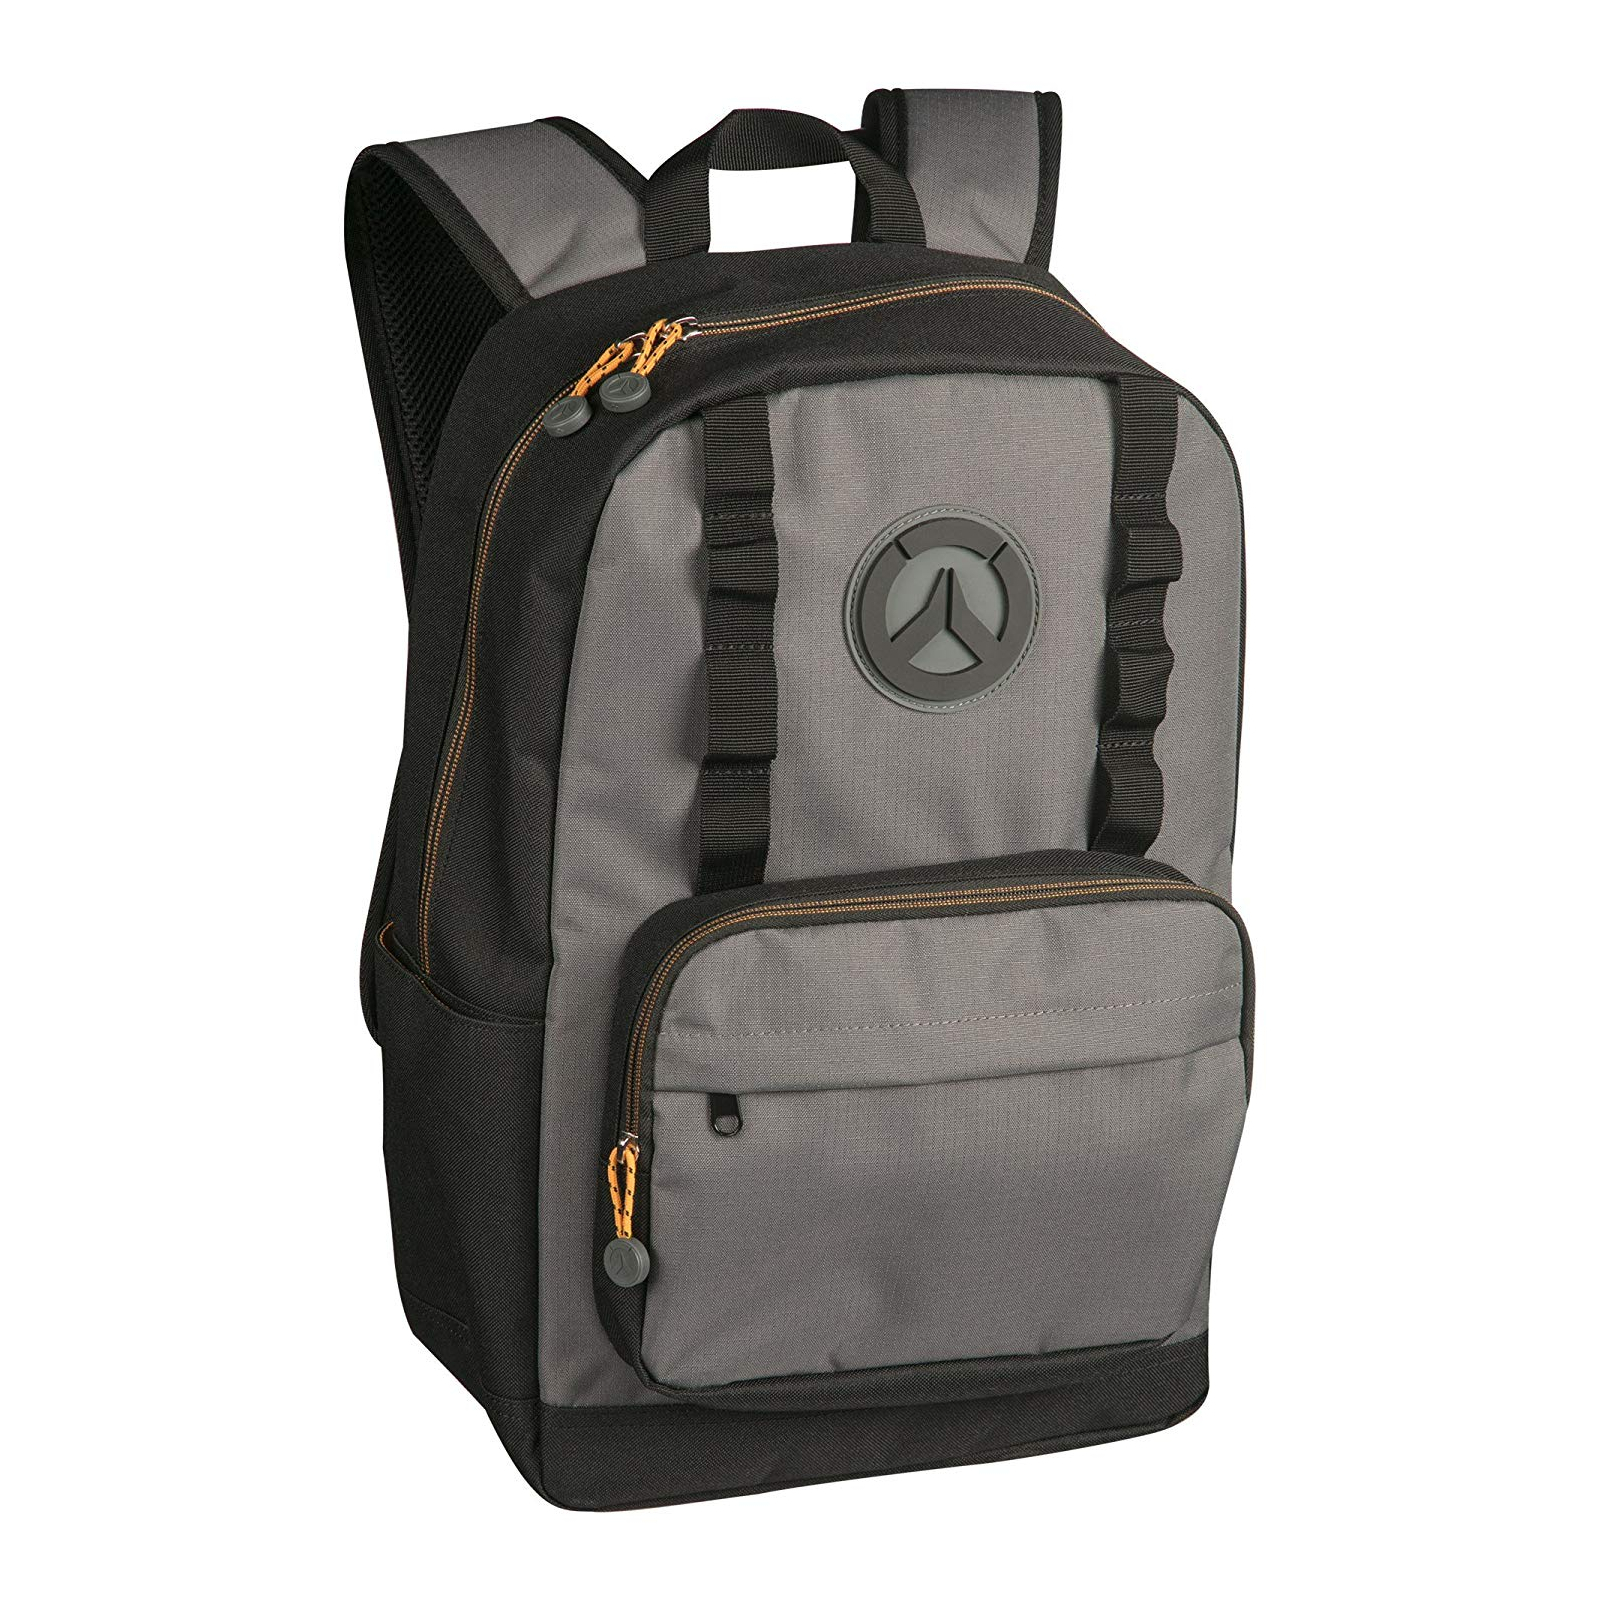 Рюкзак школьный Jinx Overwatch Payload Backpack Black/Grey (JINX-8155)